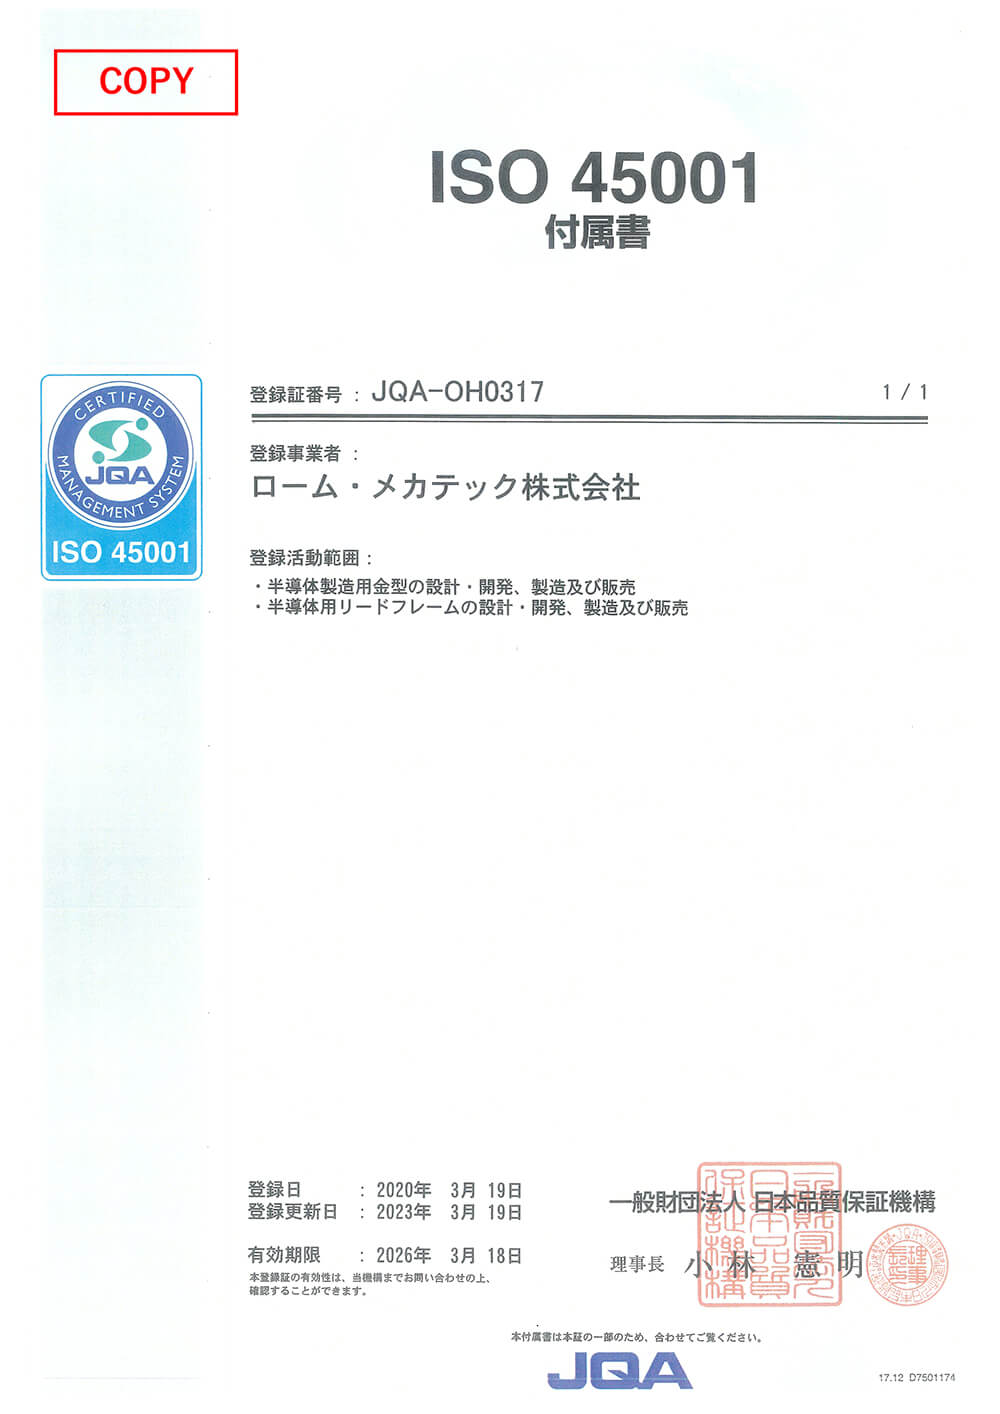 ISO45001 ローム・メカテック株式会社（日本語版）